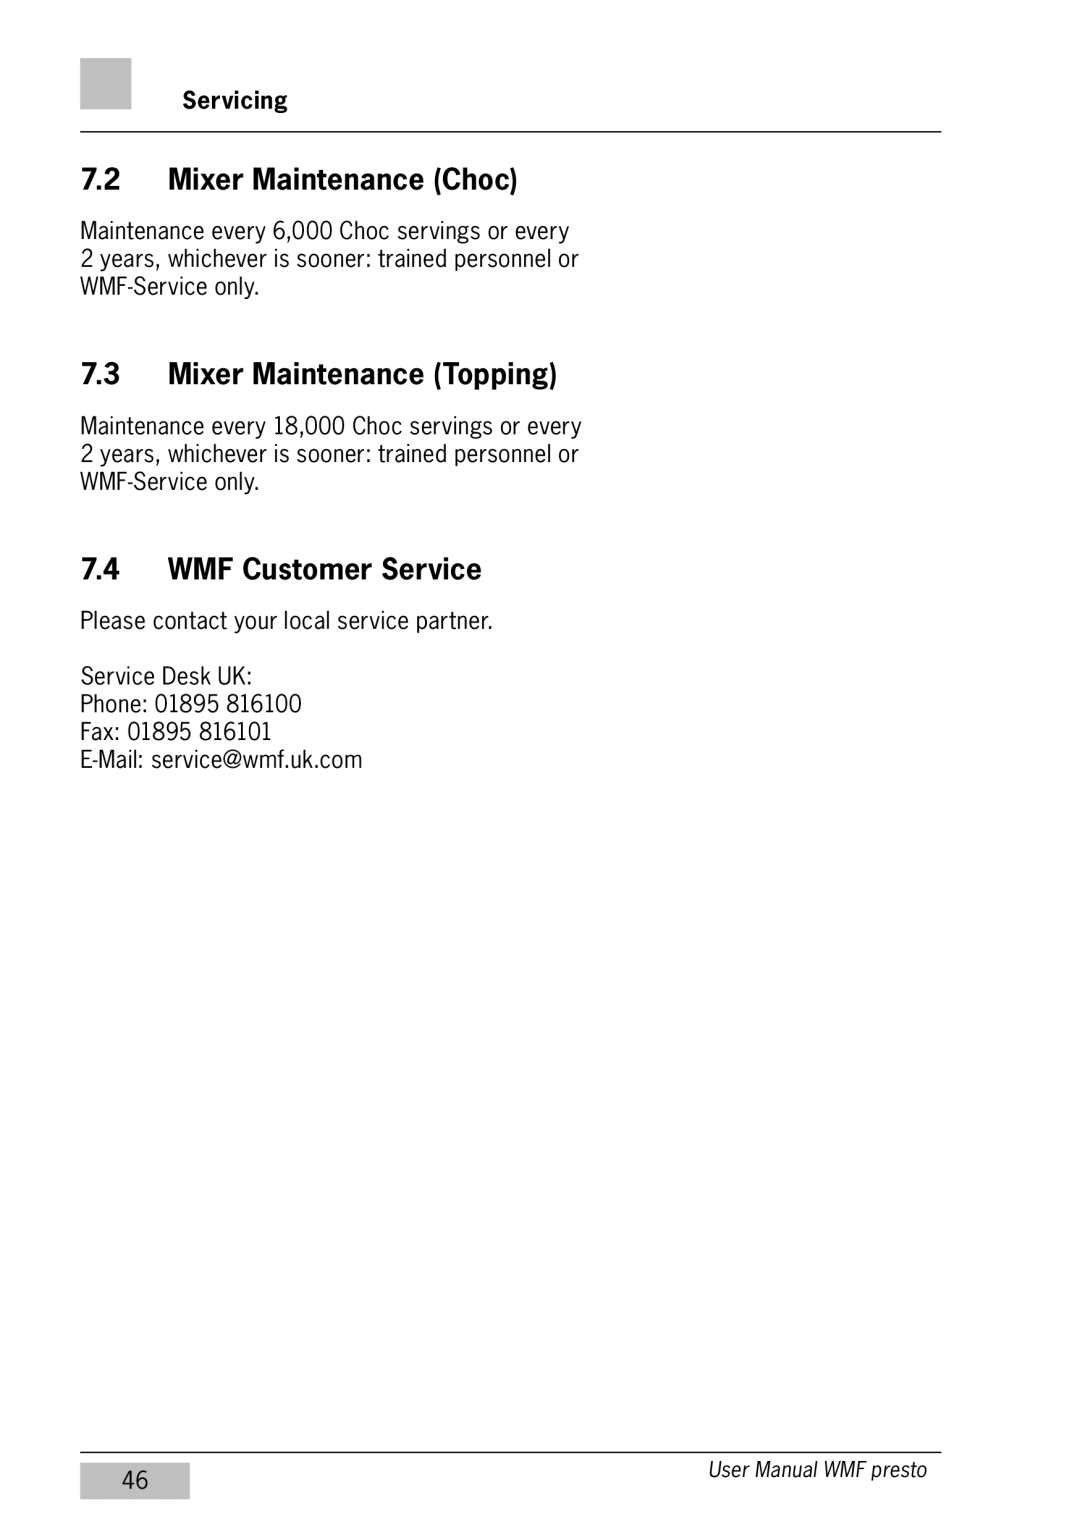 WMF Americas 1400 user manual Mixer Maintenance Choc, Mixer Maintenance Topping, WMF Customer Service, Servicing 